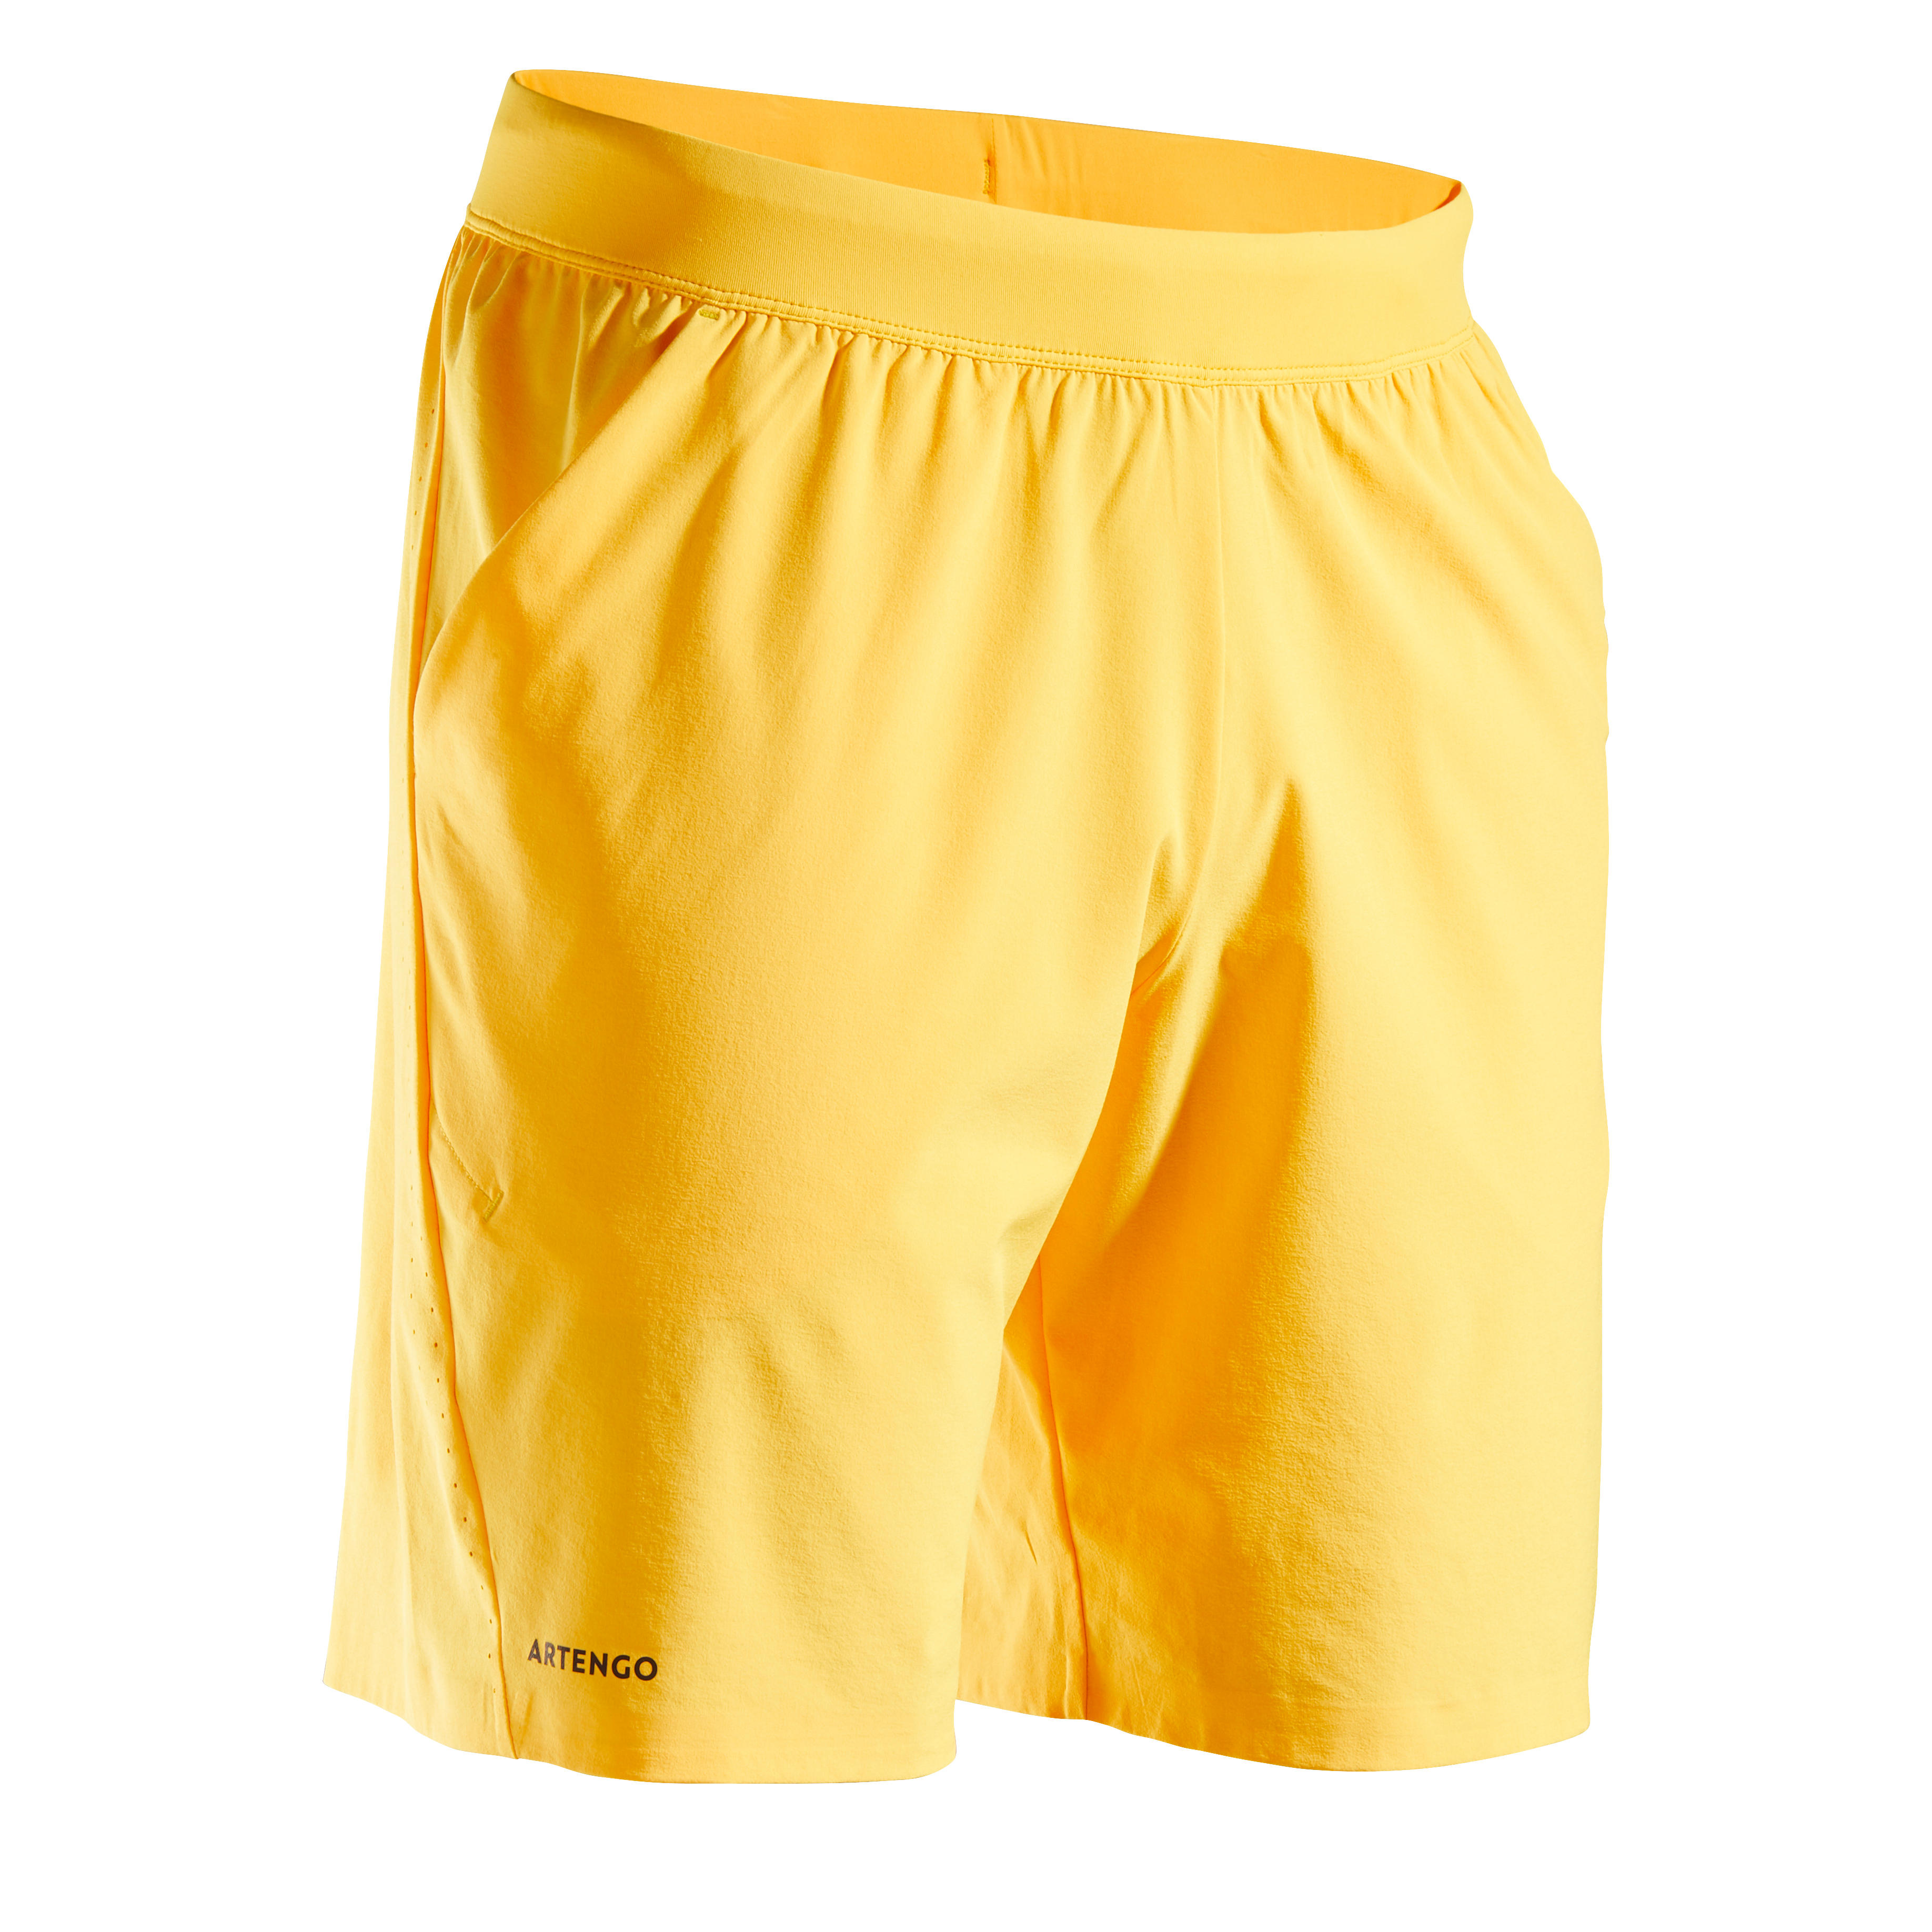 decathlon tennis shorts